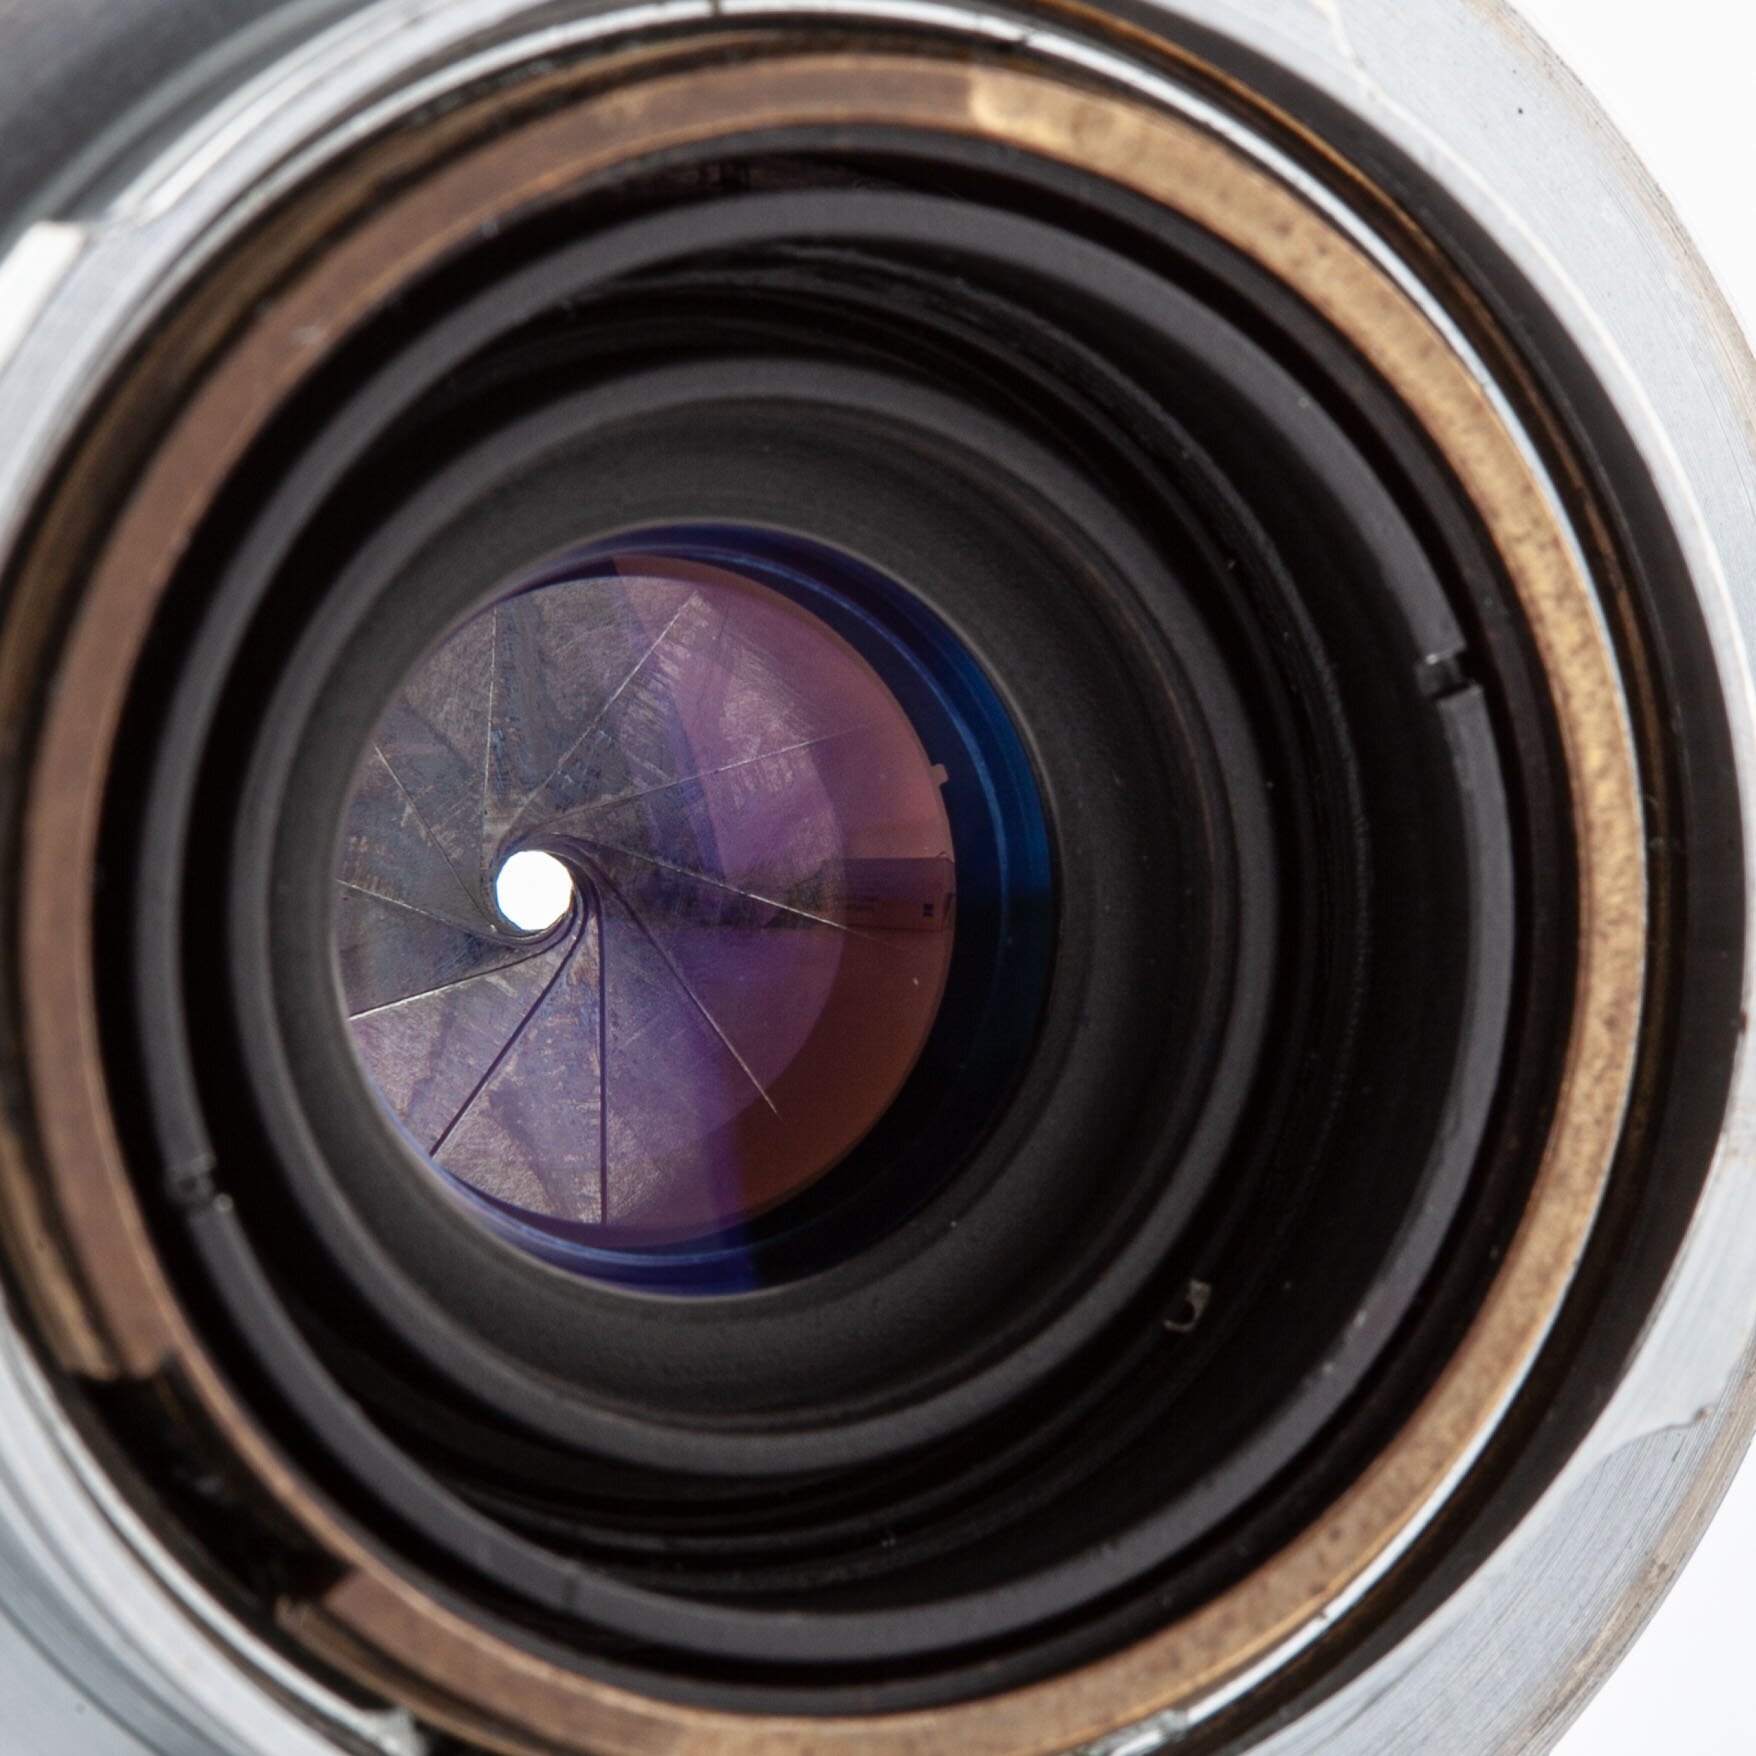 Leica M Summaron 2,8/35mm inkl. Brille chrom